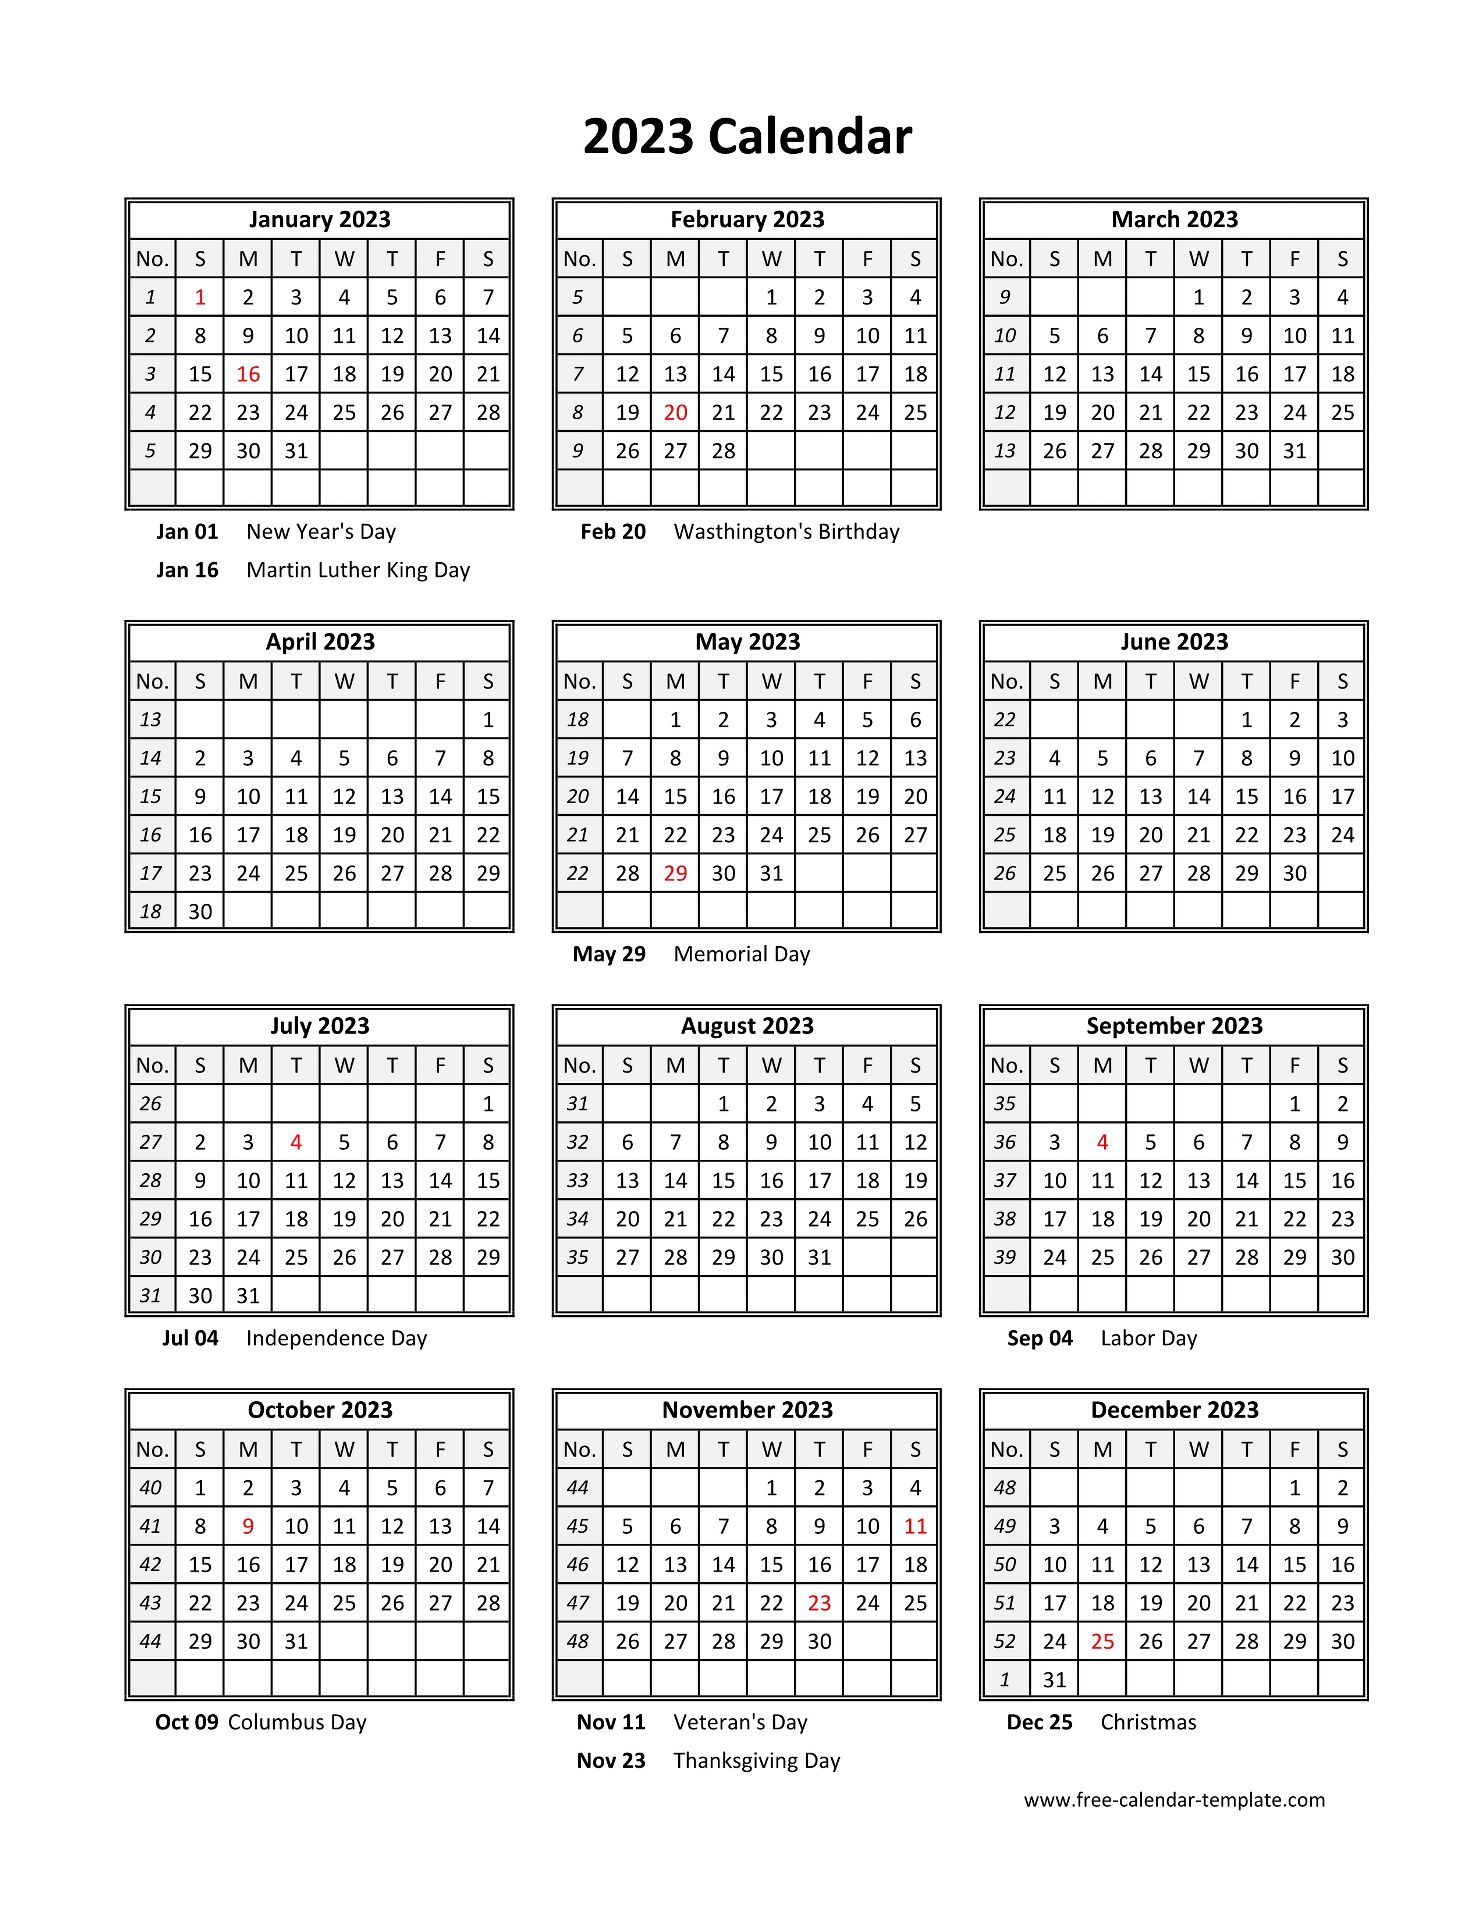 calendar-2023-pdf-free-download-with-holidays-get-calendar-2023-update